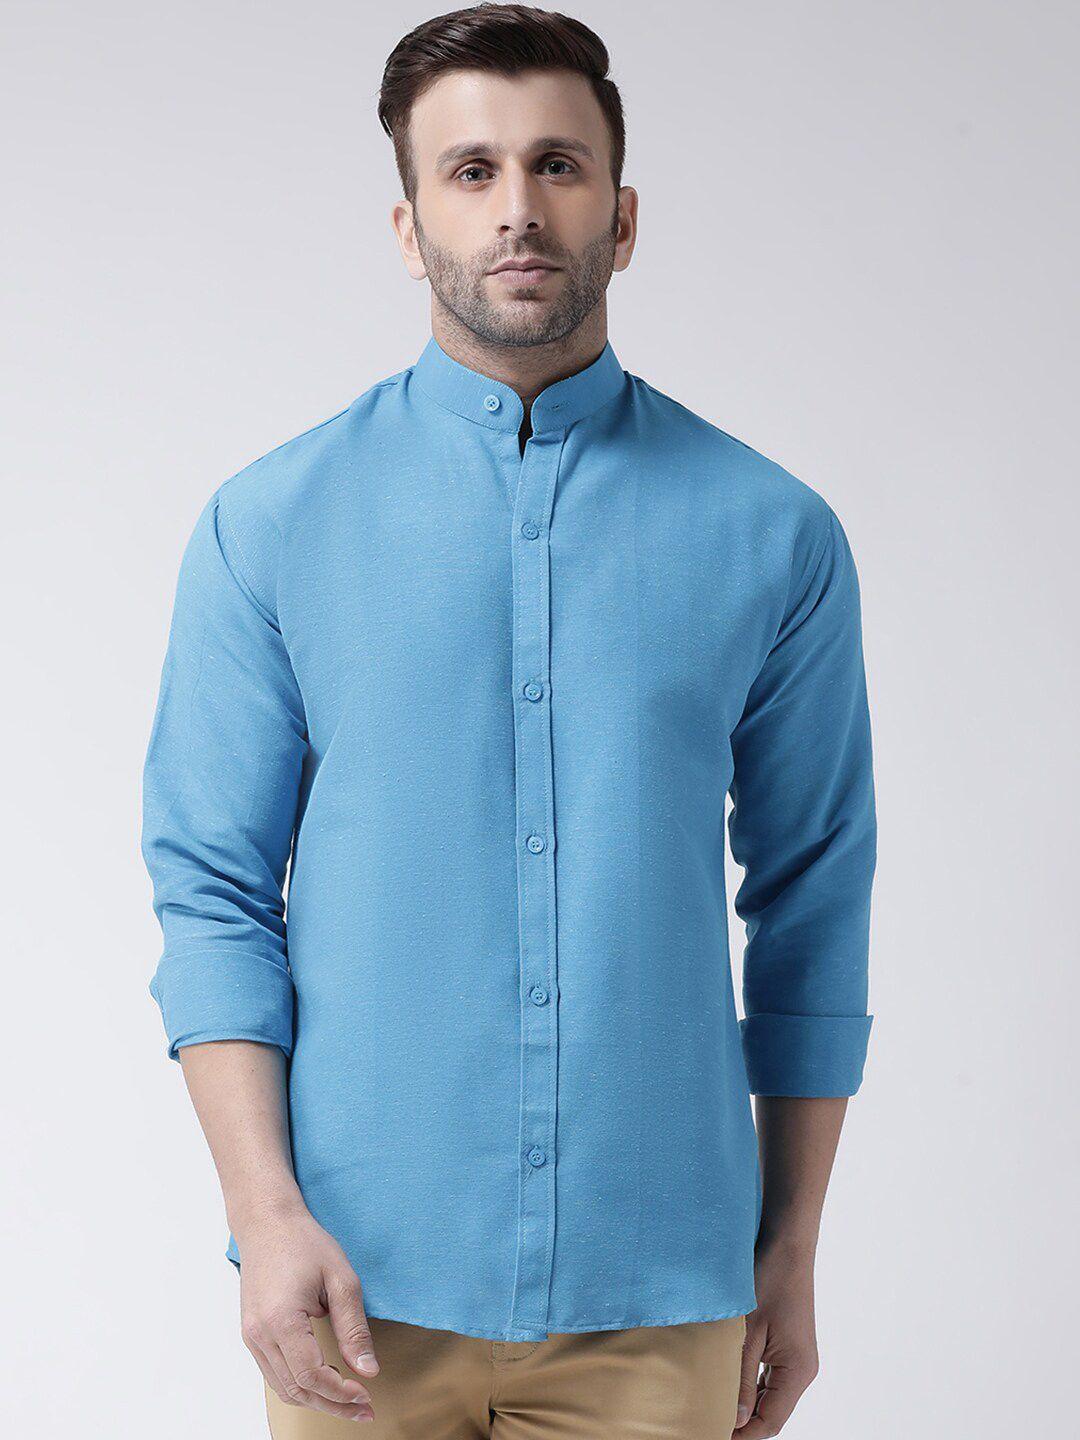 riag men blue solid casual shirt